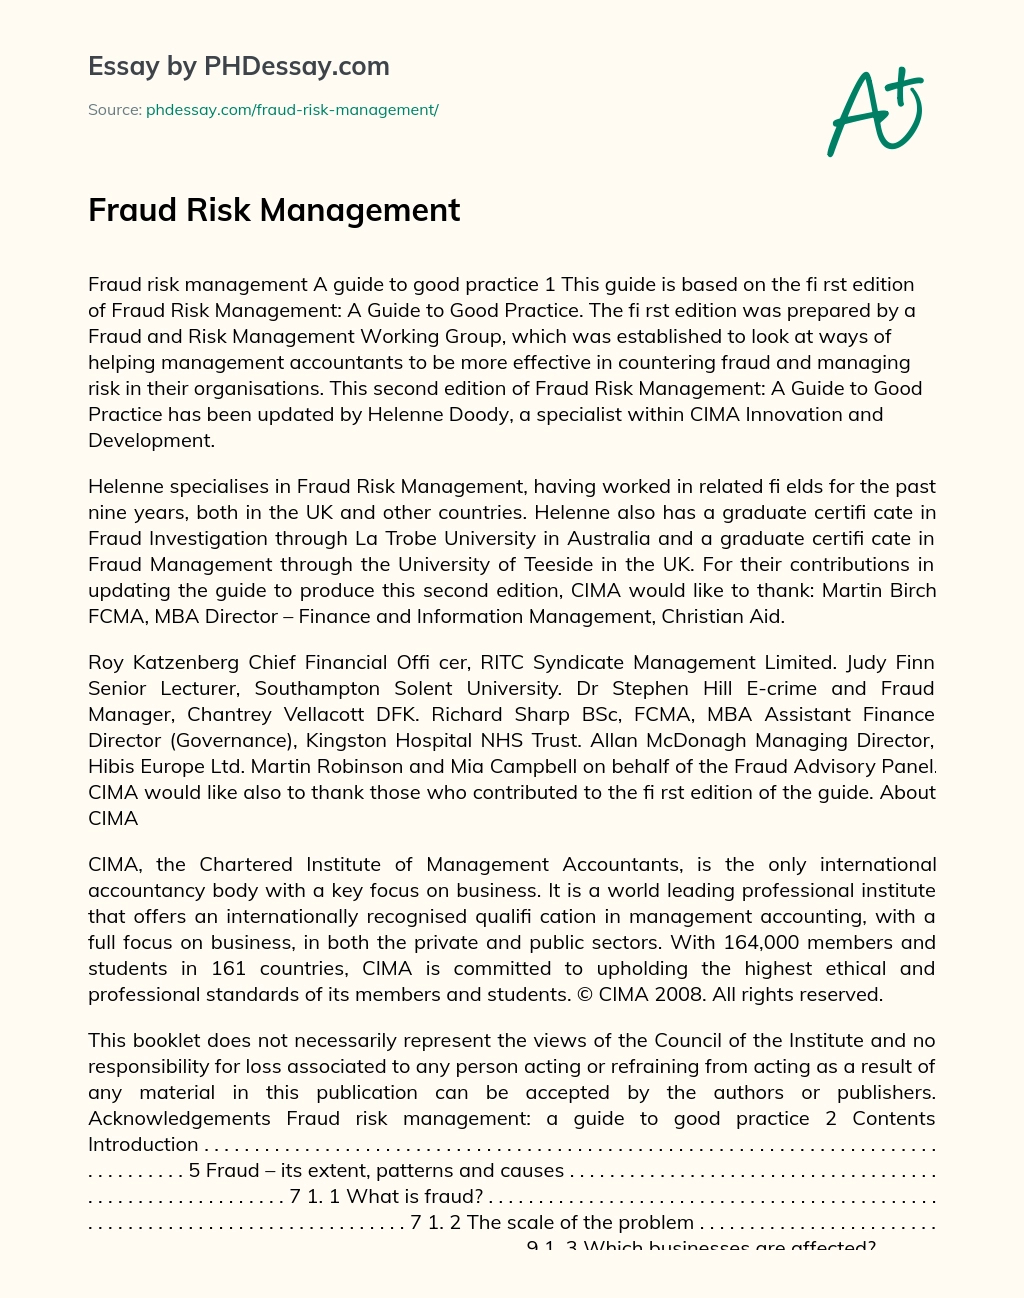 Fraud Risk Management essay